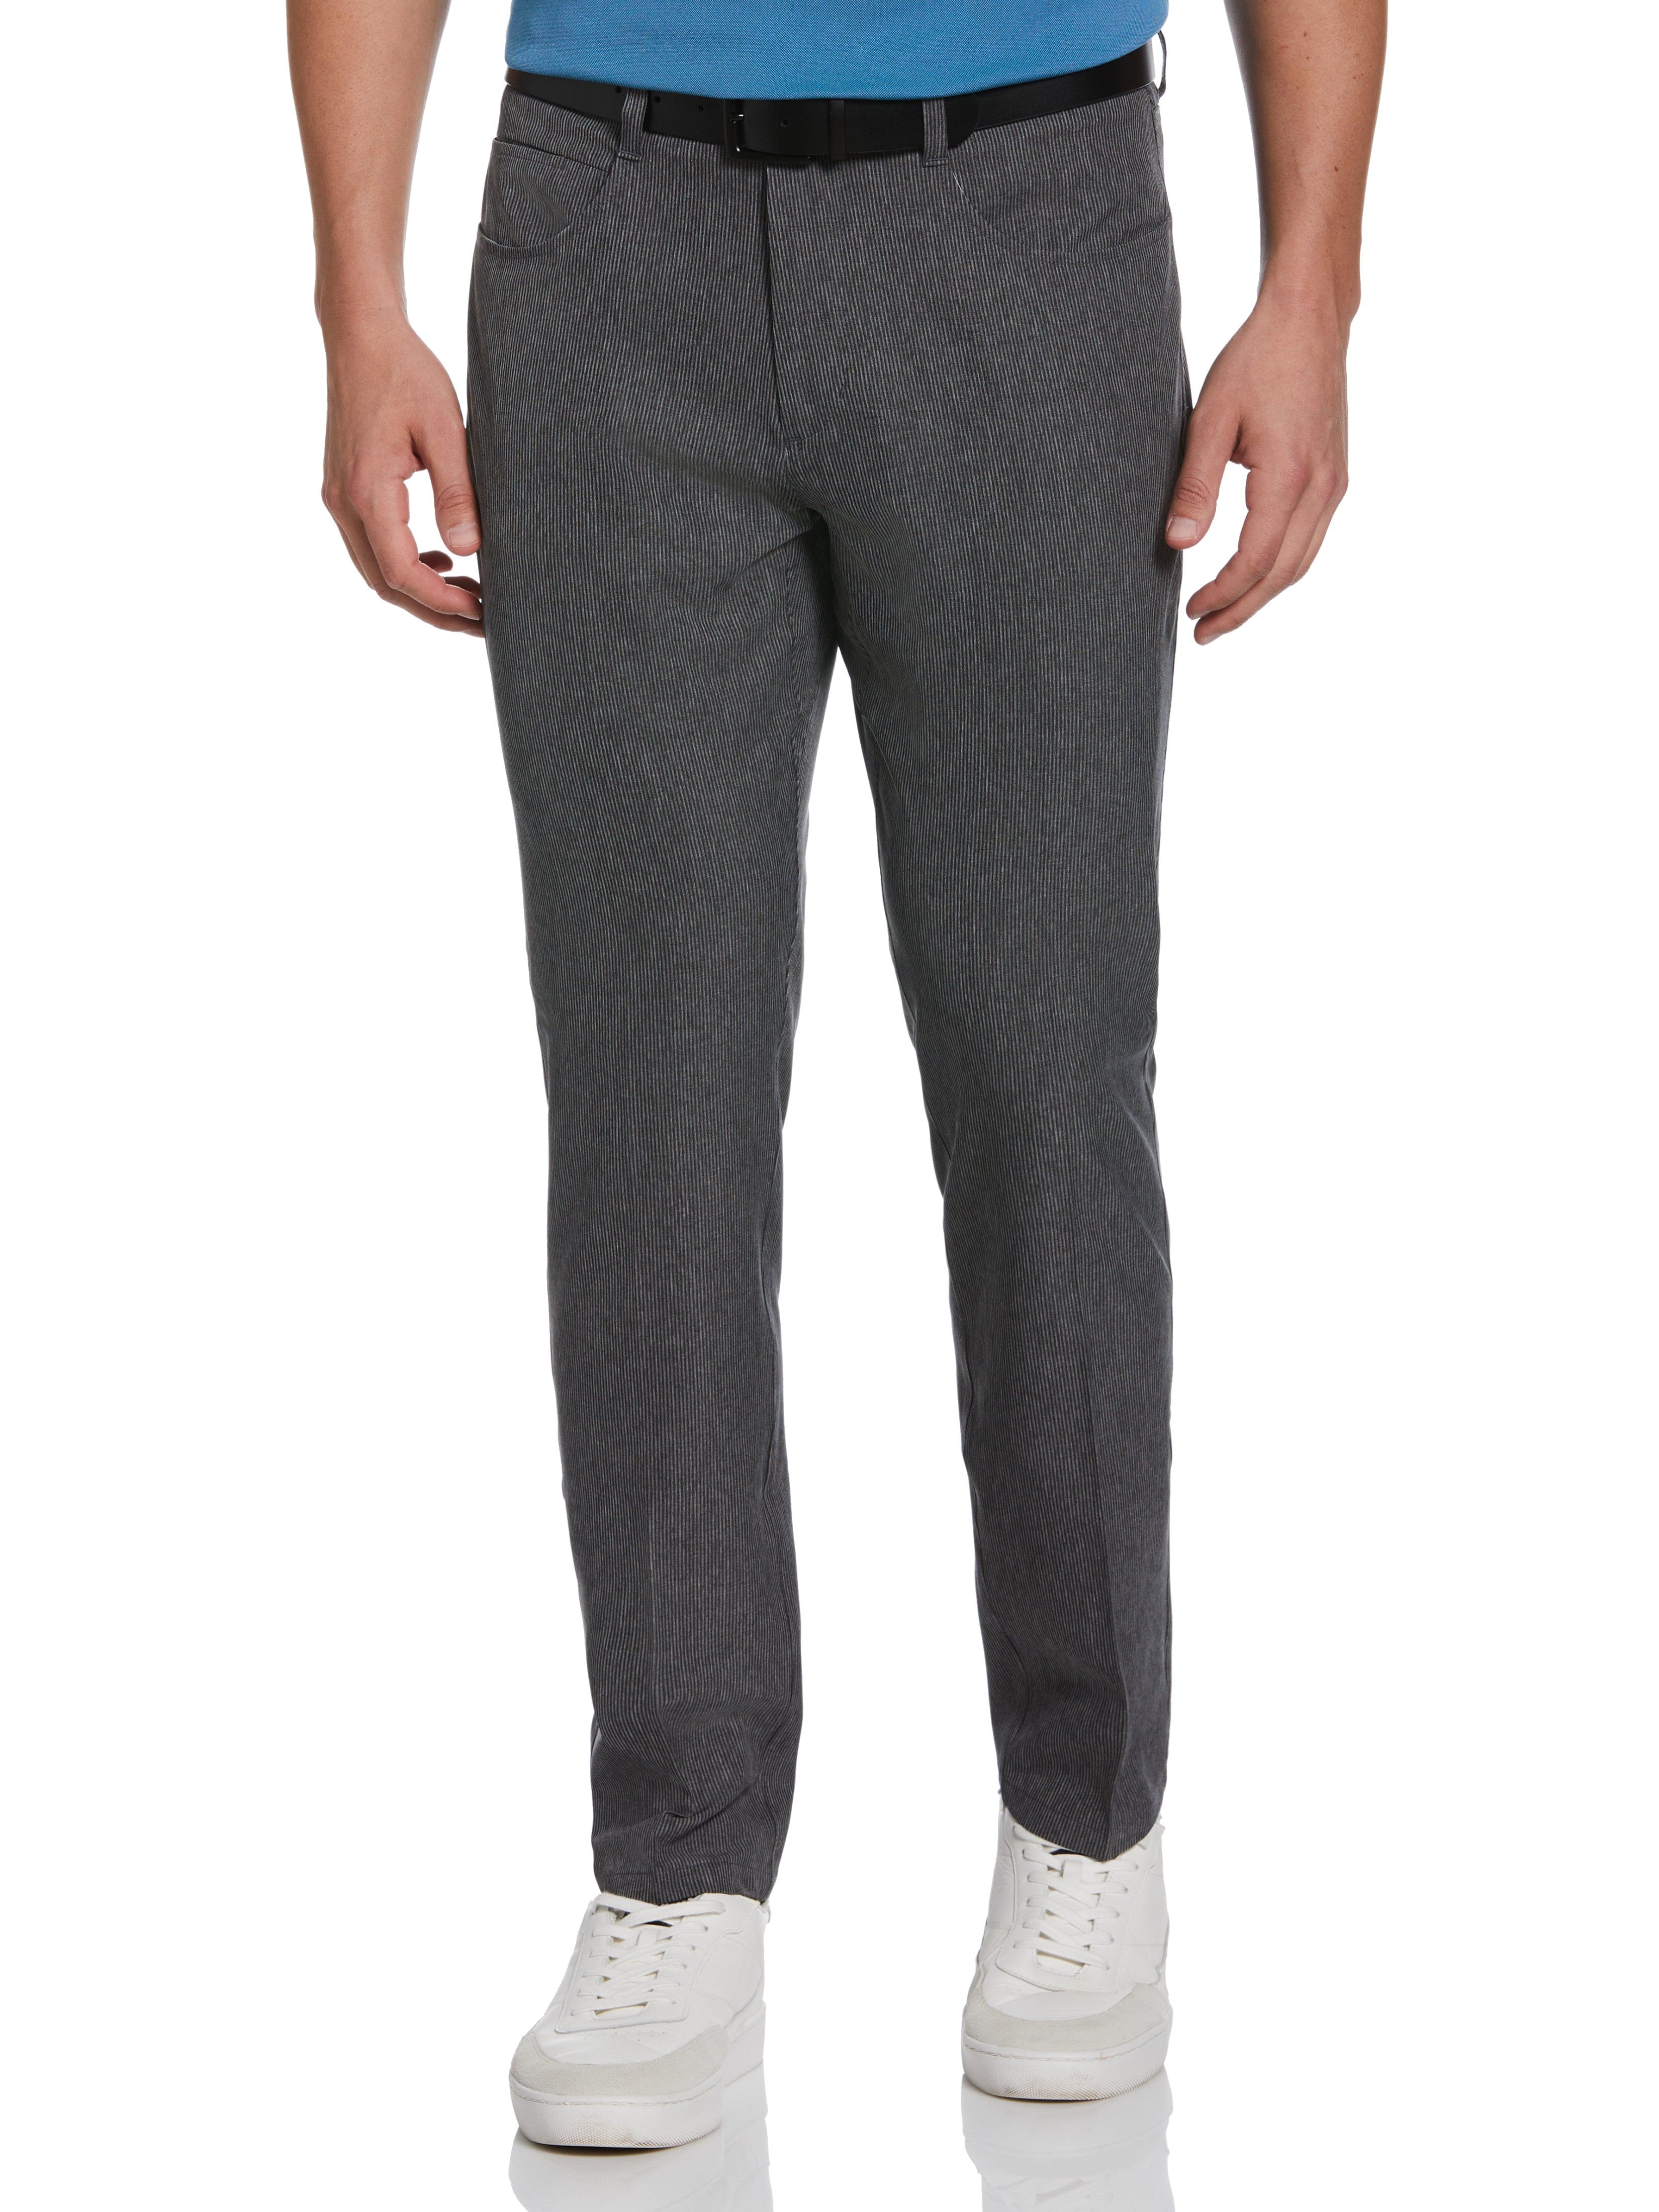 Original Penguin Mens Flat Front Fine Line Print Golf Pants, Size 36 x 34, Black, Polyester/Elastane | Golf Apparel Shop